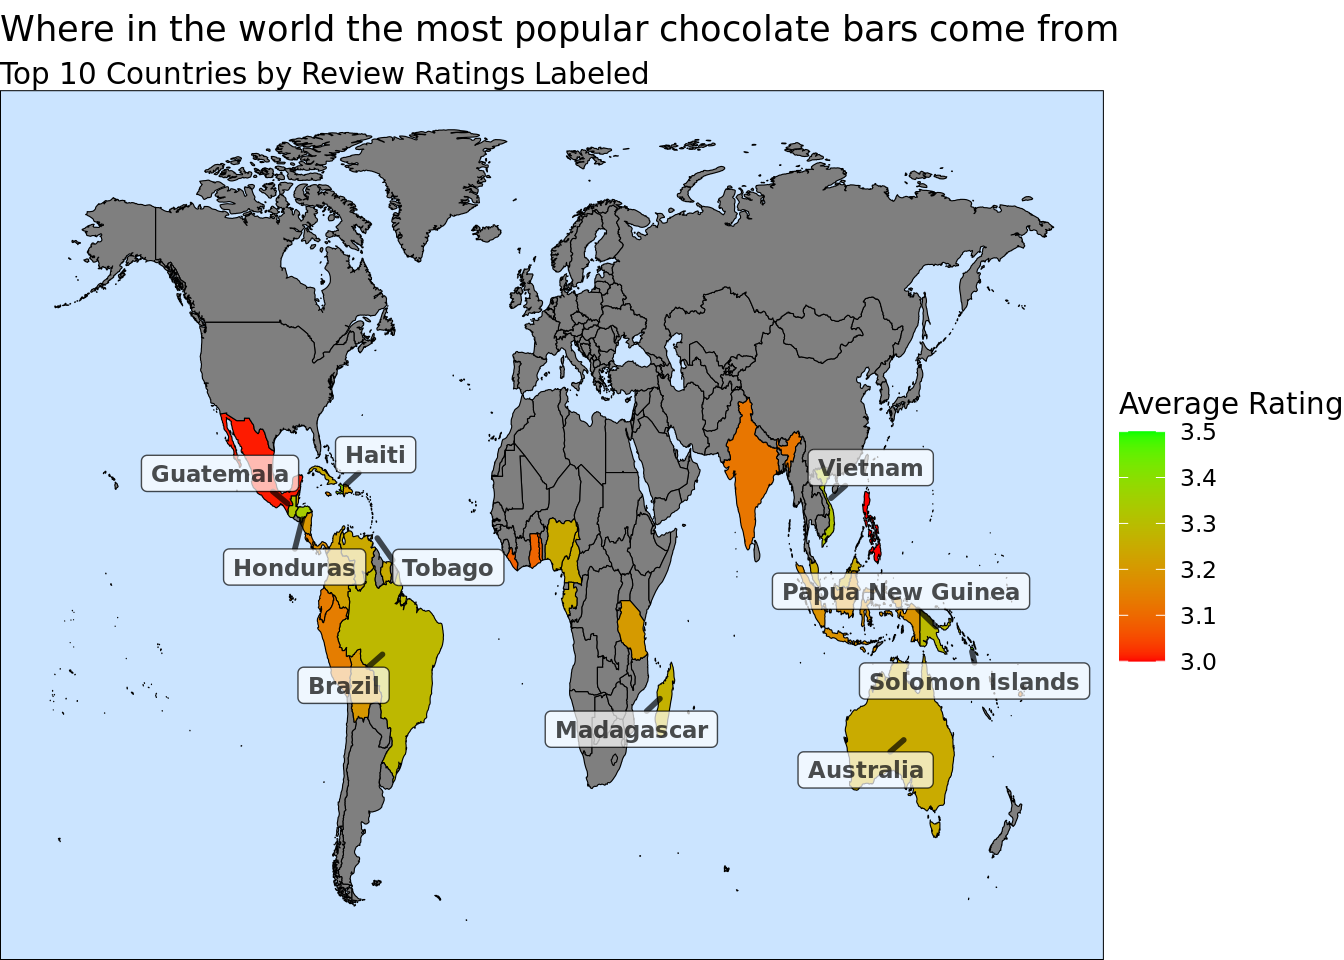 Chocolate bar ratings over time.